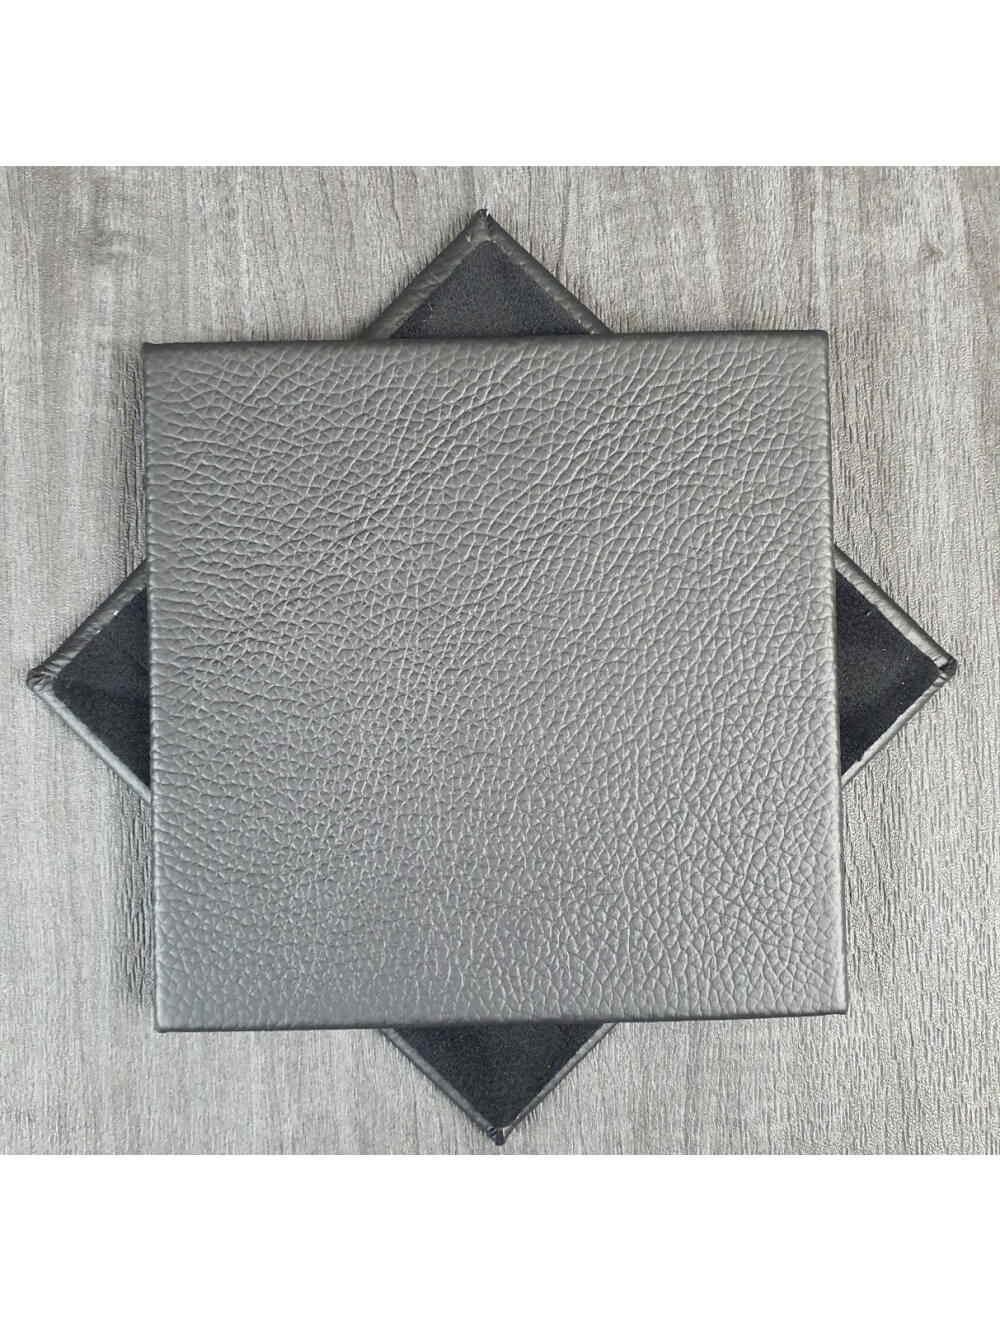 Black Shelly Leather Coaster- 10cm Sq (sale item)